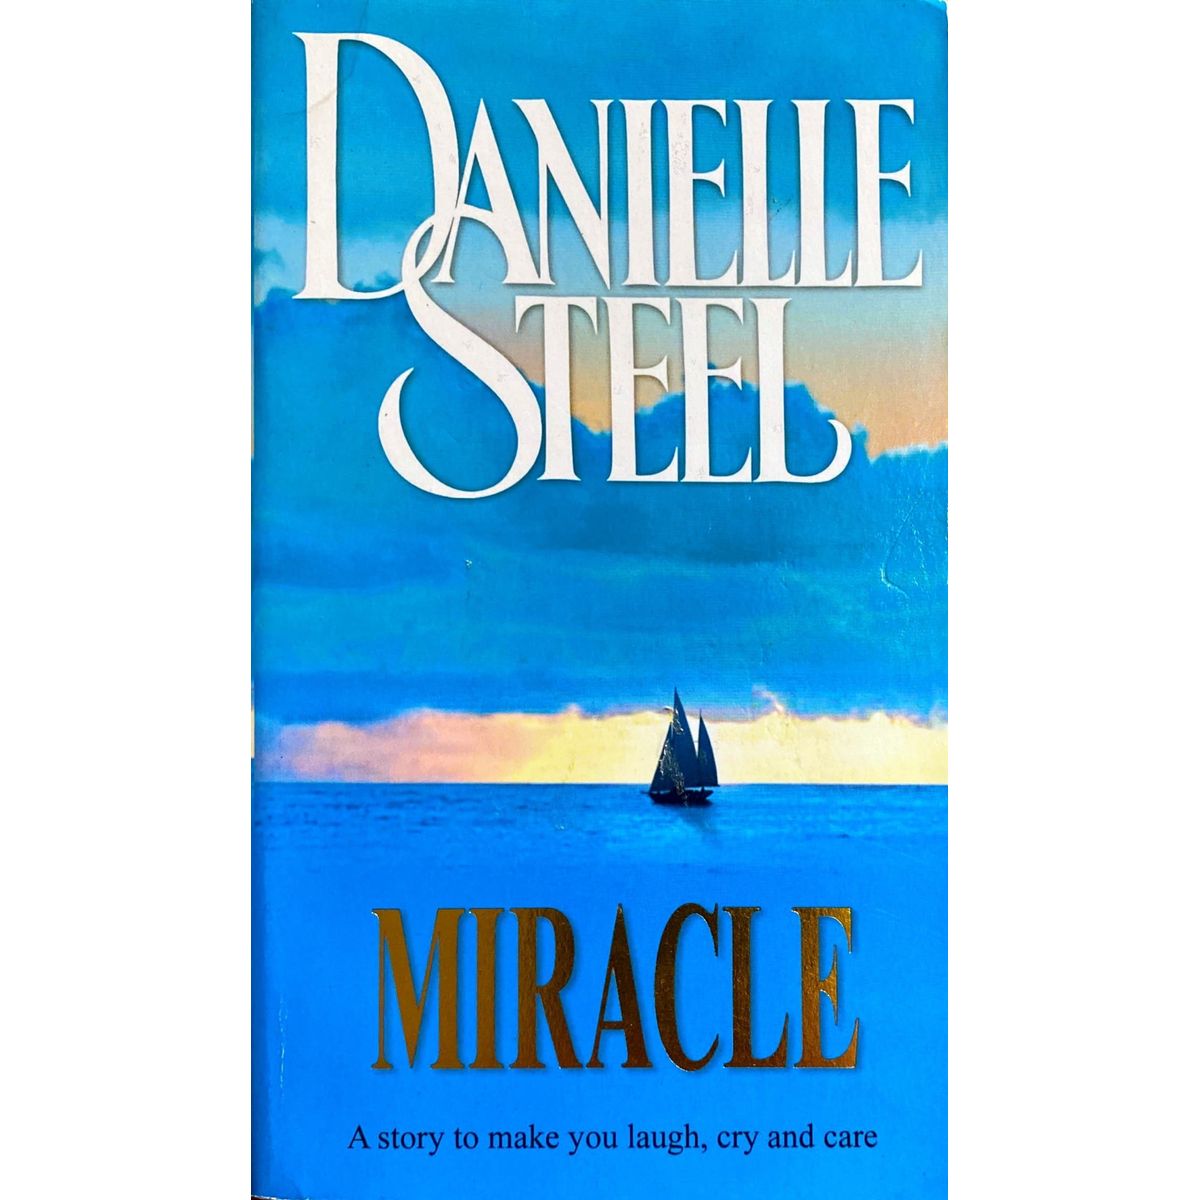 ISBN: 9780593050149 / 0593050142 - Miracle by Danielle Steel [2005]